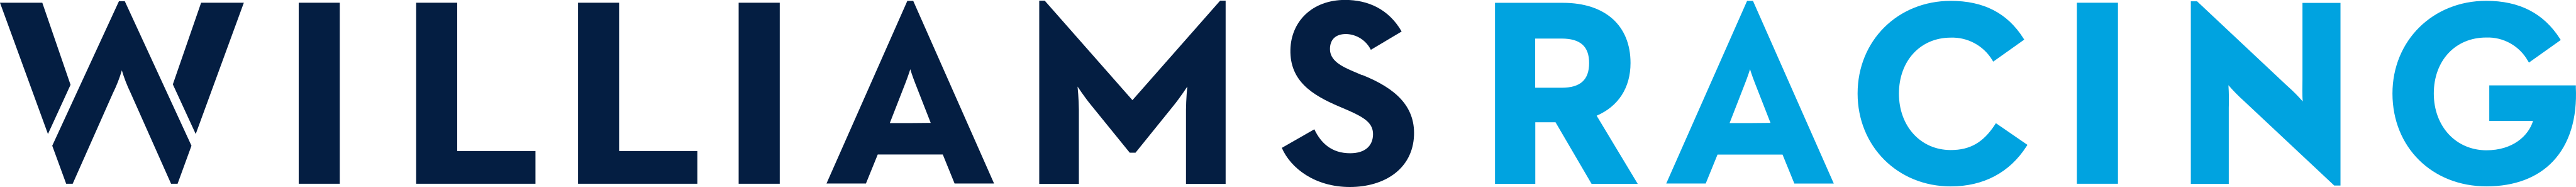 Williams Racing Logo.